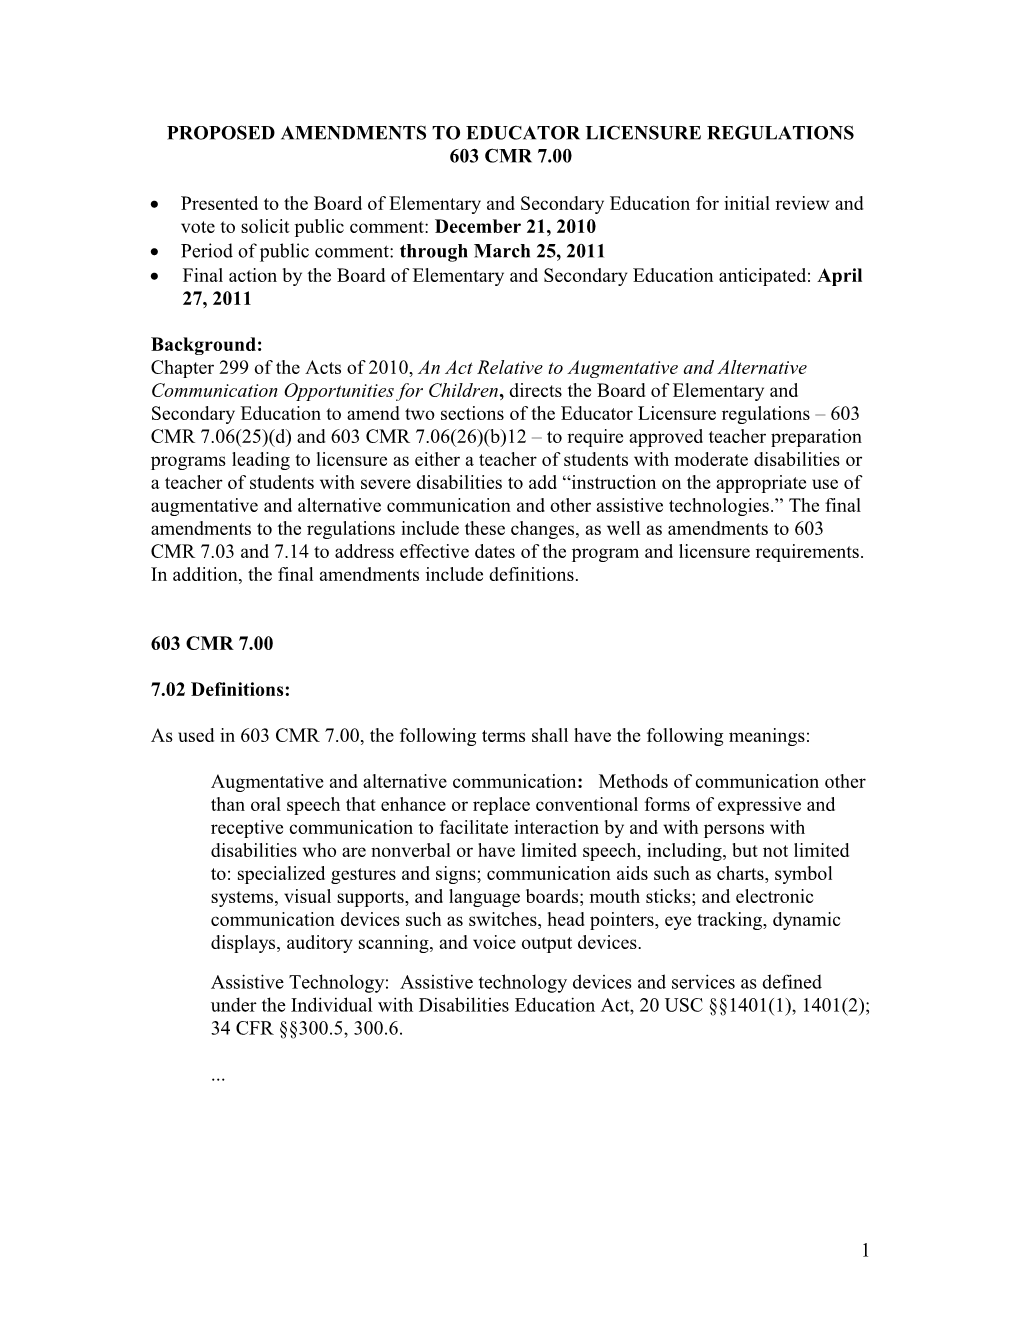 4/27/11 Board Agenda #2: Proposed Amendments to Educator Licensure Regulations 603 CMR